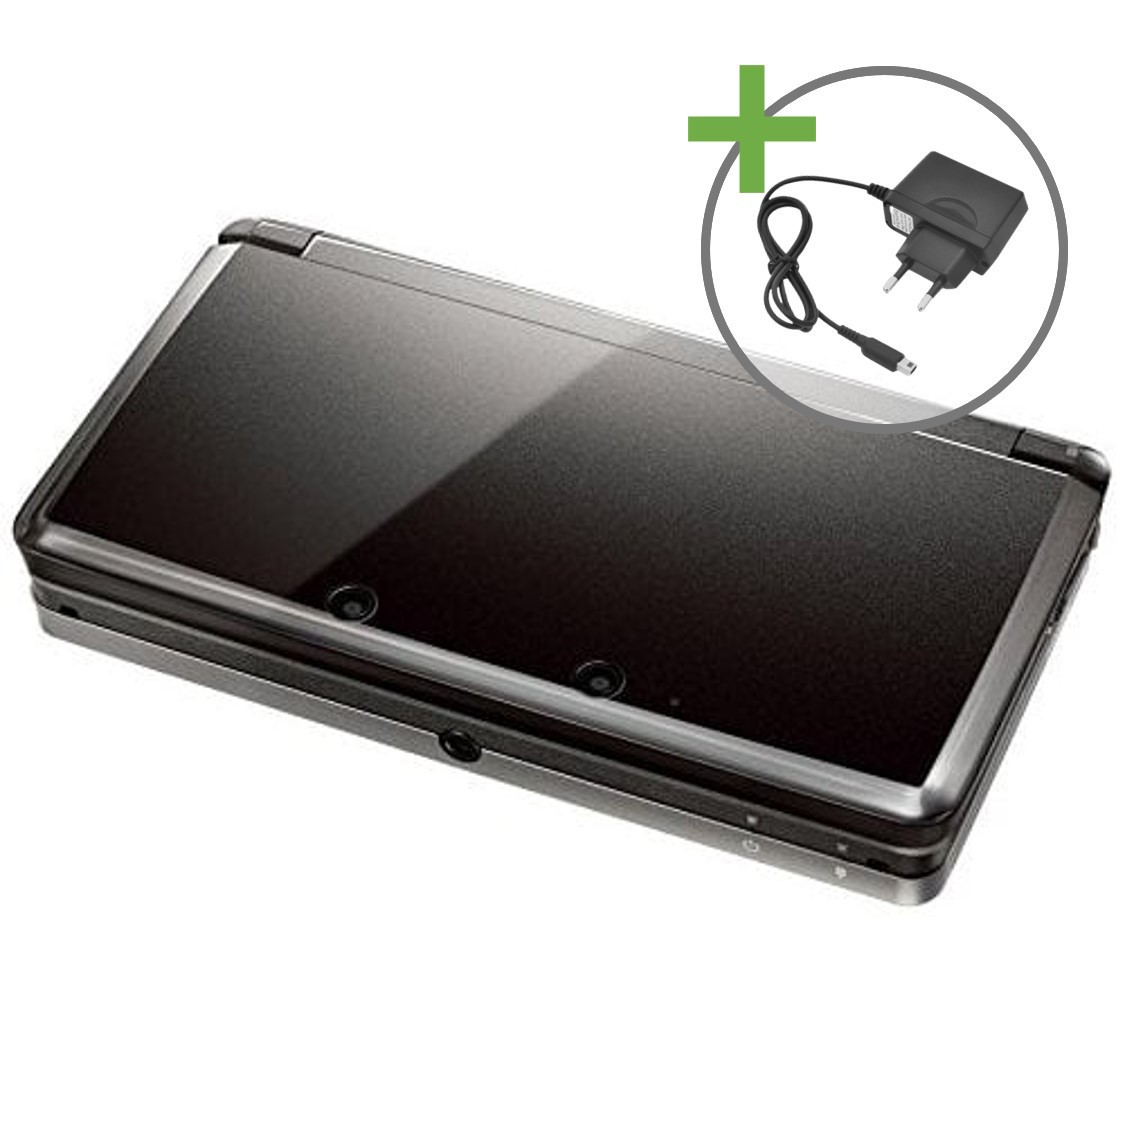 Nintendo 3DS Cosmos Black [Complete] - Nintendo 3DS Hardware - 3